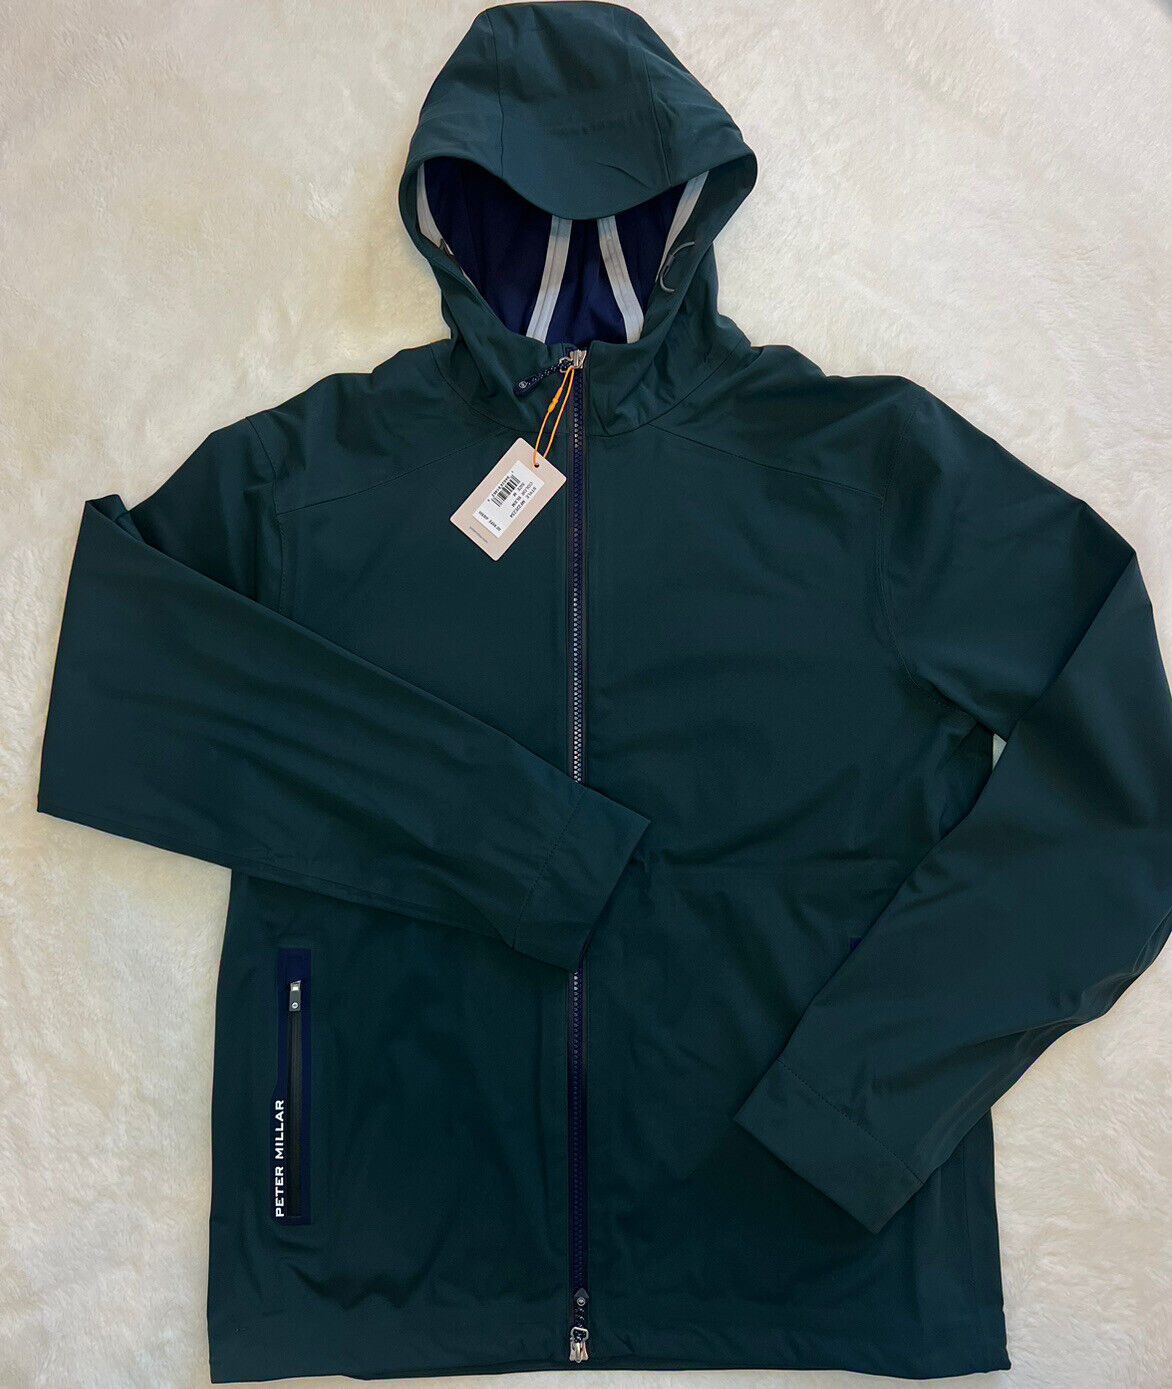 Peter Millar Performance Fabric Hyperlight Link Hooded Jacket NWT $268 M Green